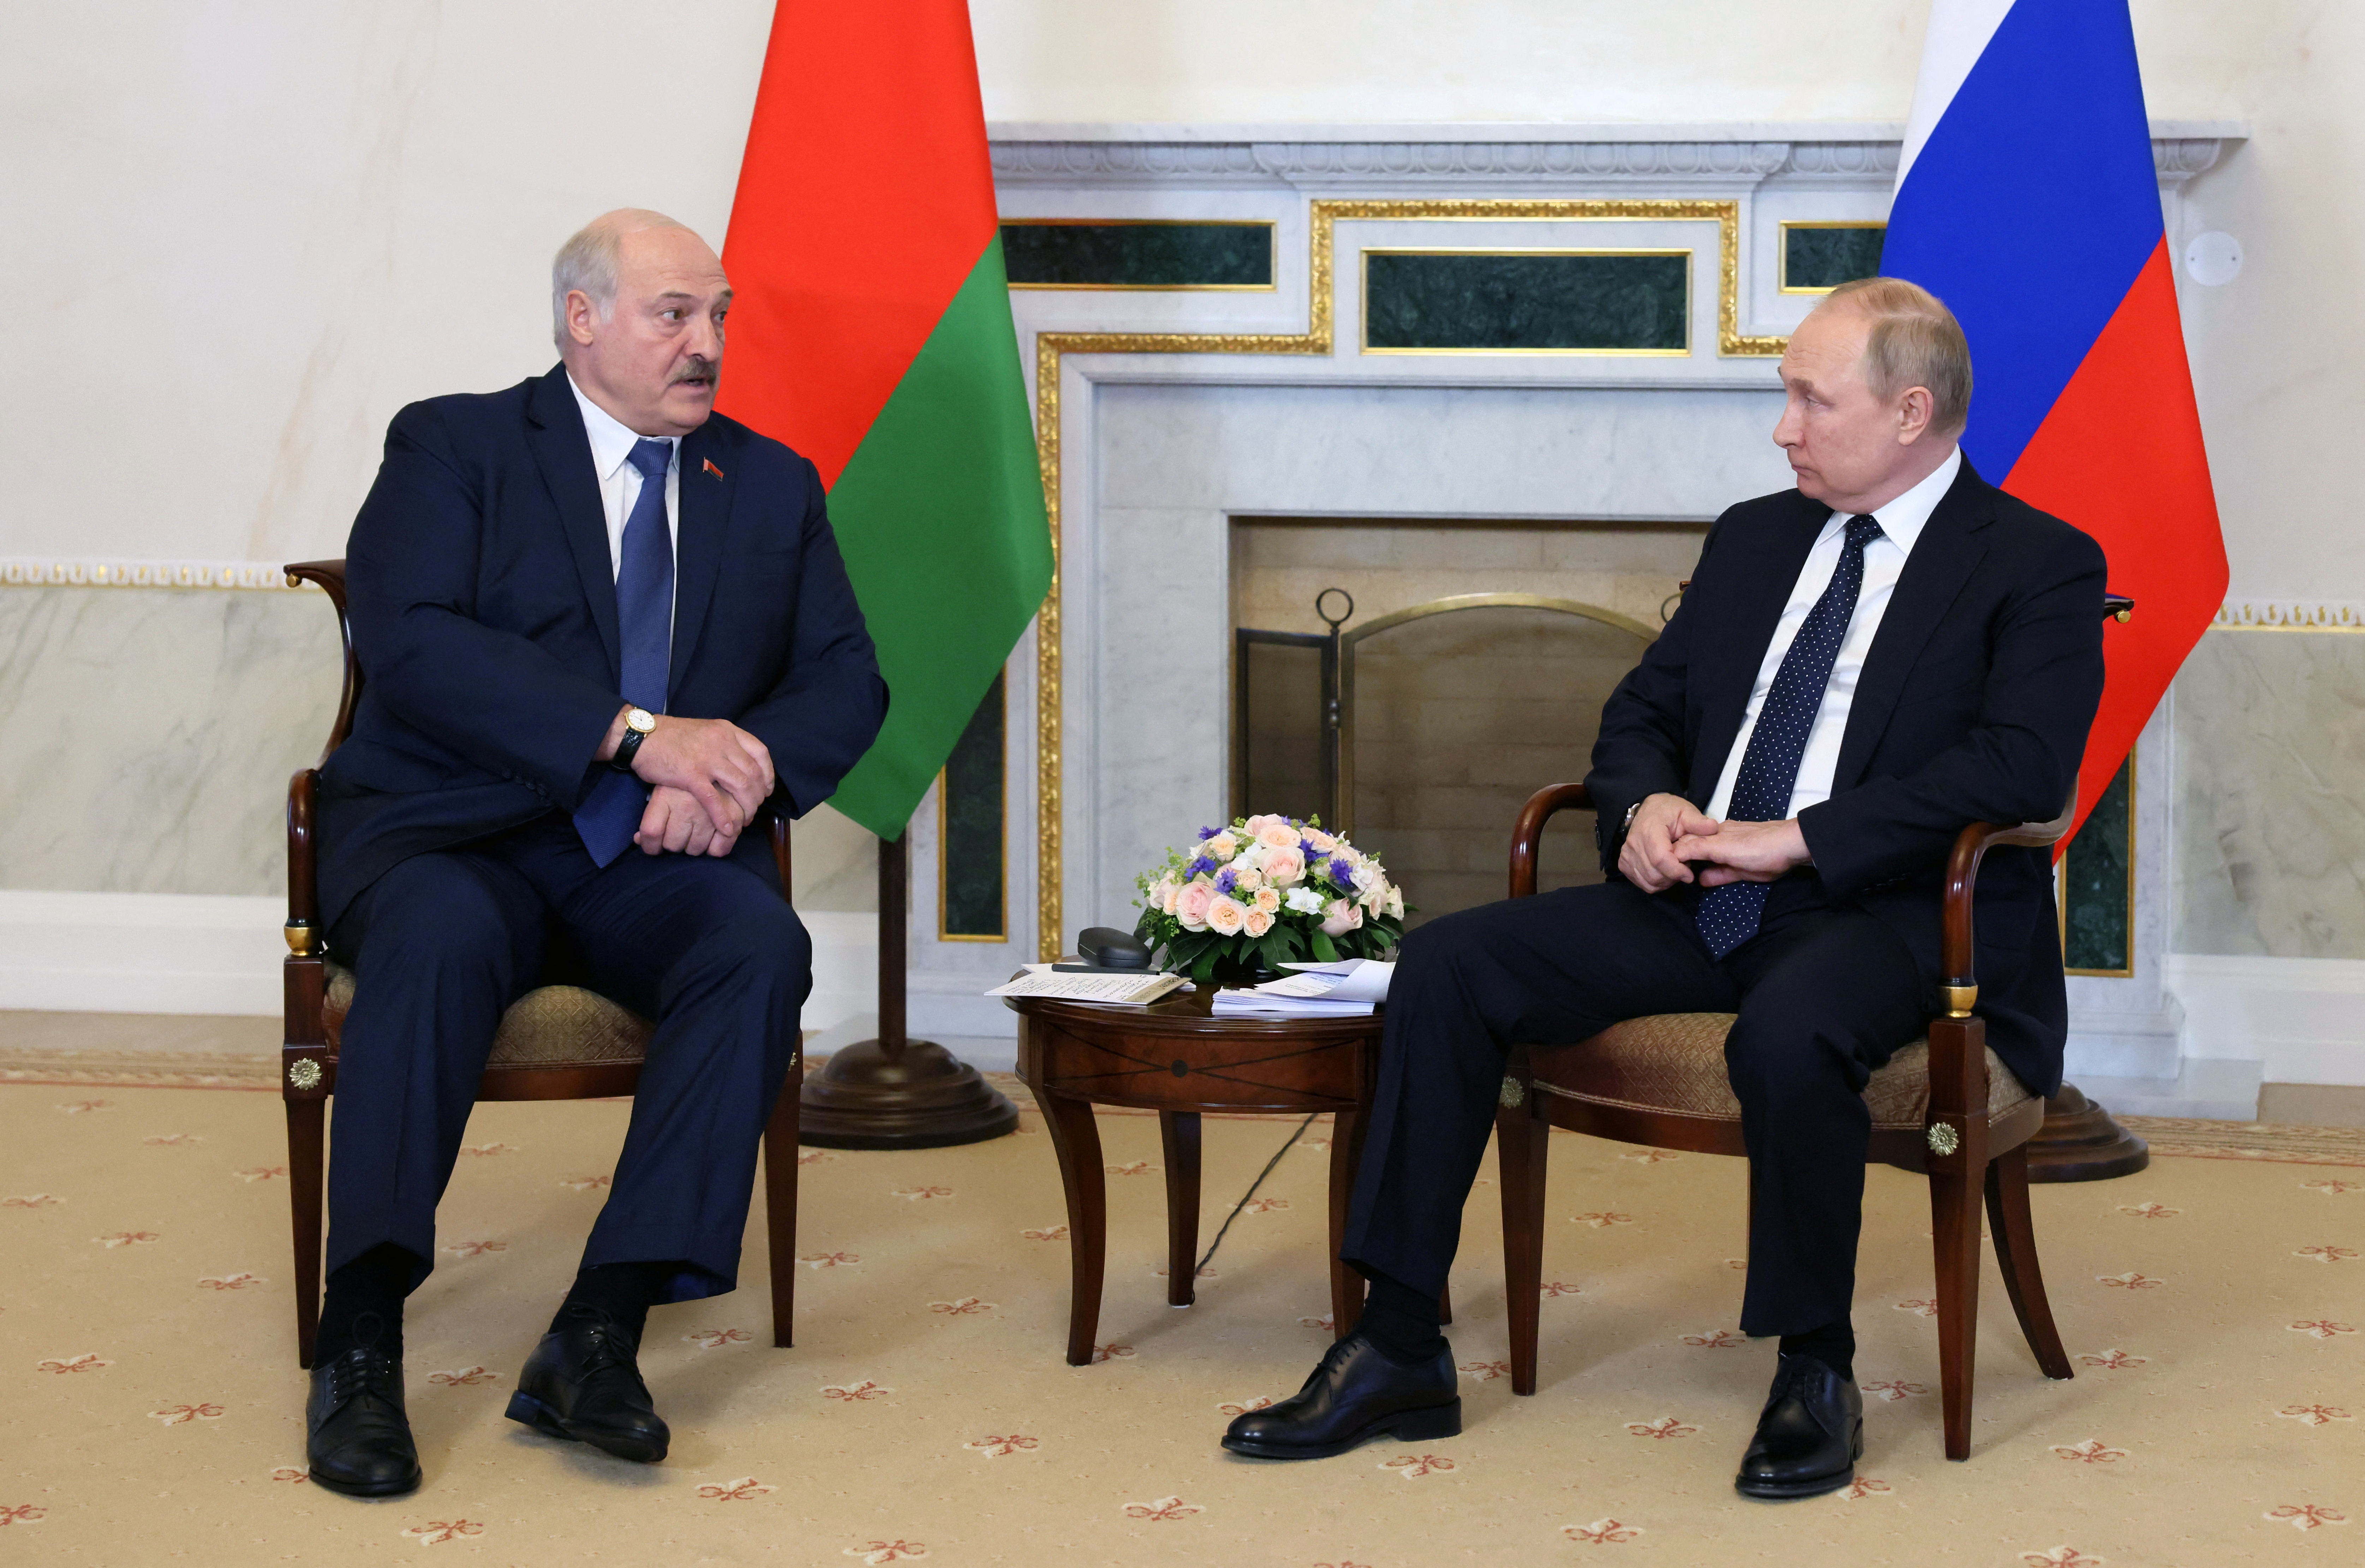 Russian President Putin and Belarusian President Lukashenko meet in St. Petersburg